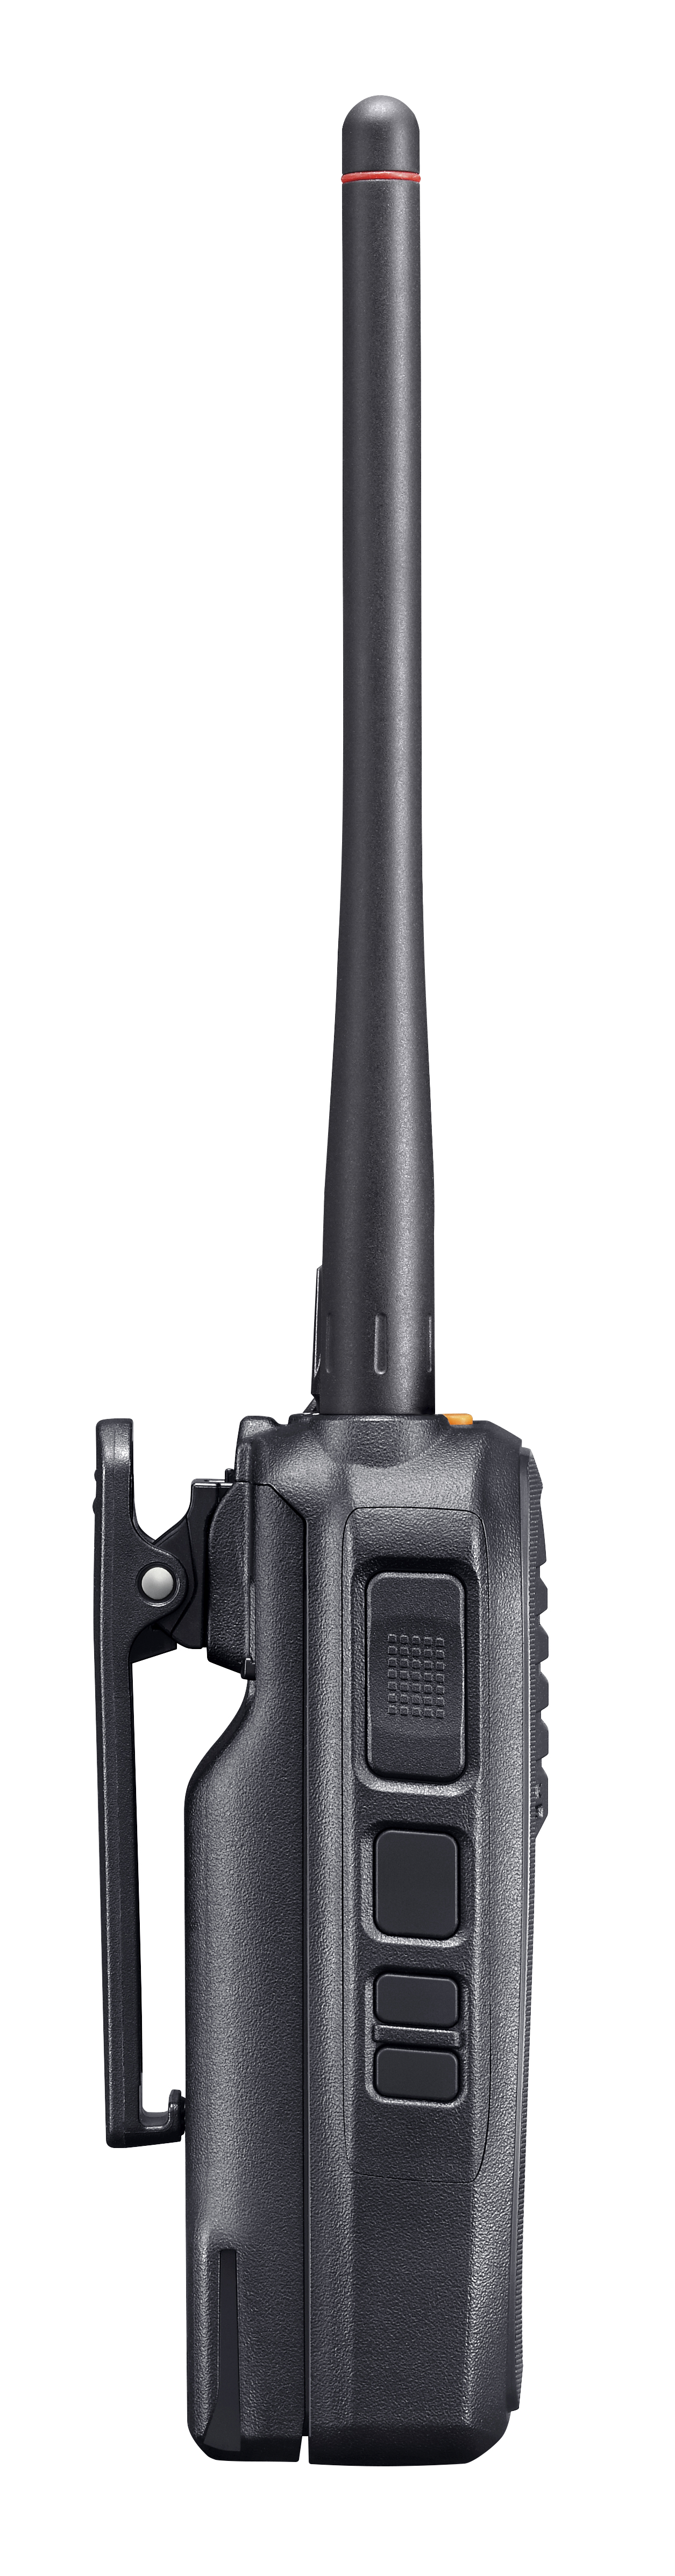 IP-M60 Marine VHF/LTE Hybrid Radio (Side)